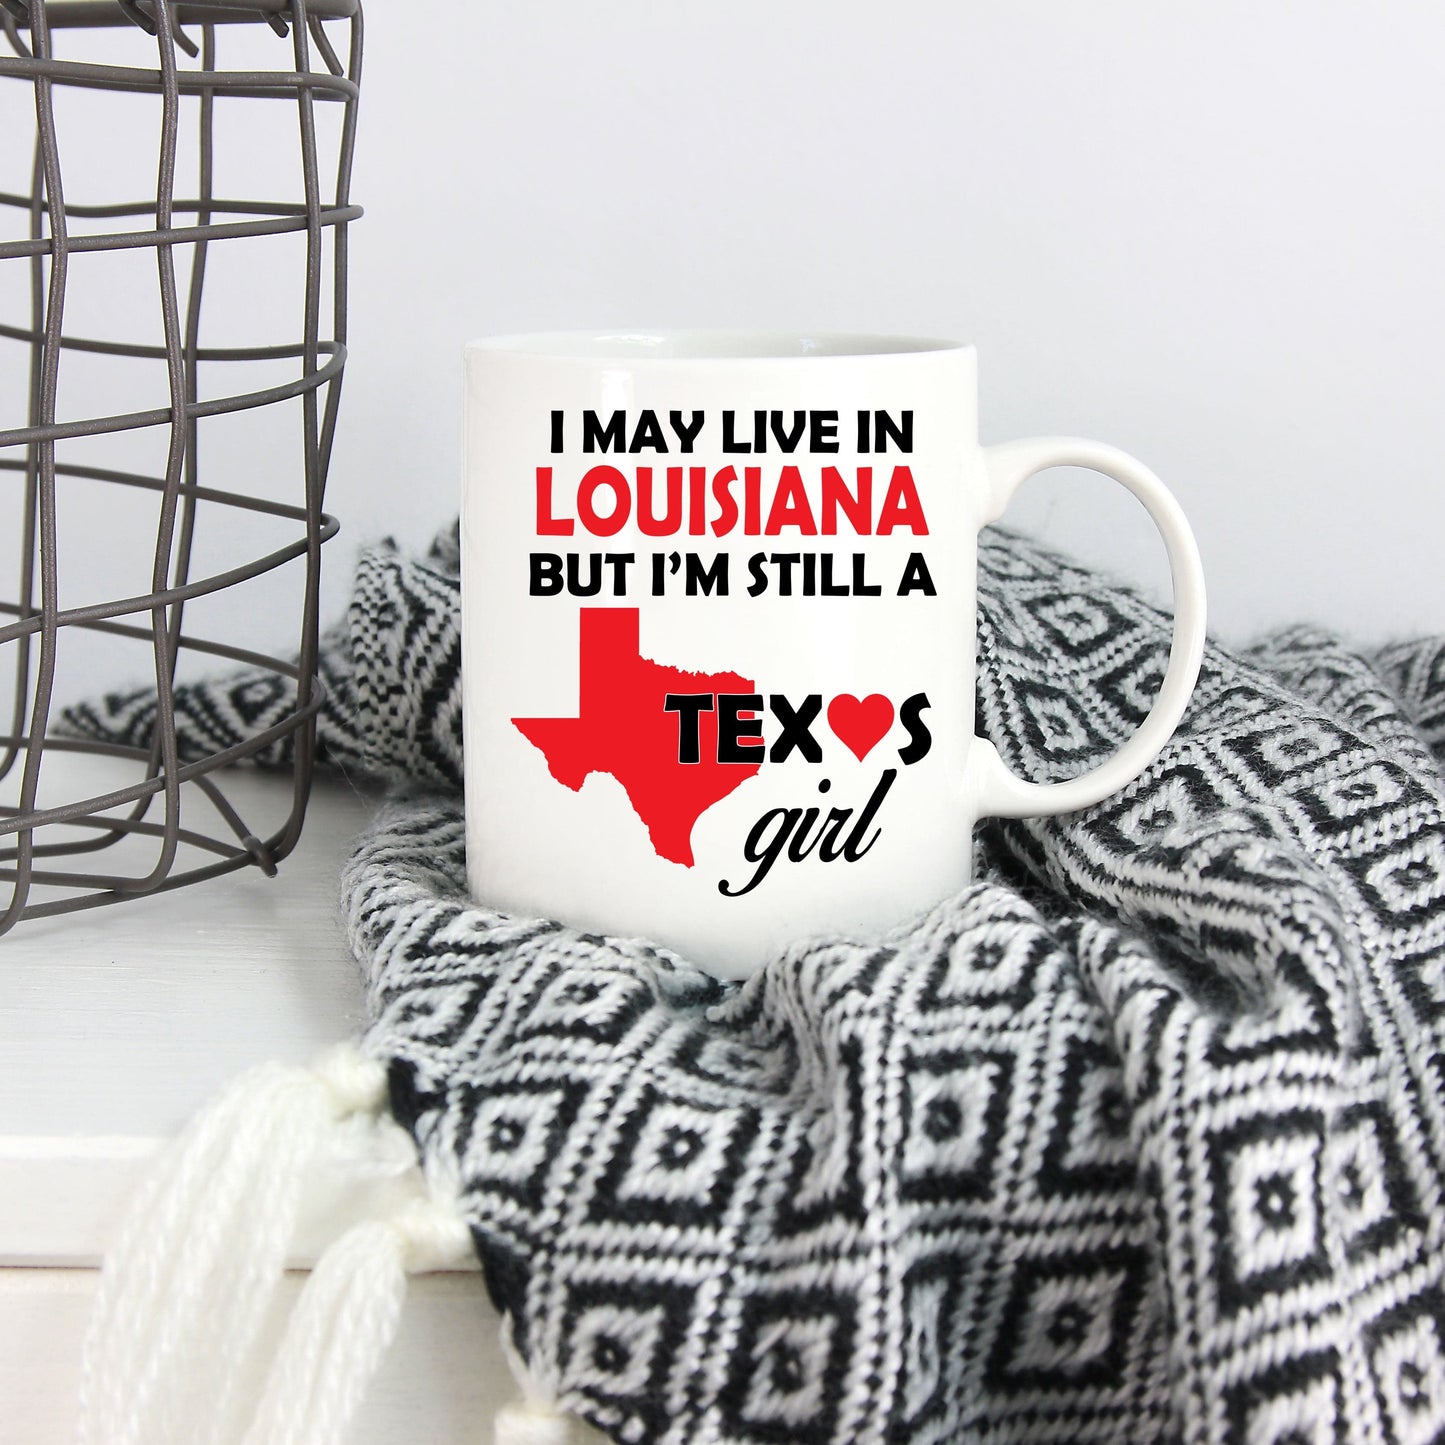 Texas Girl - I May Live In Louisiana But I'm Still a Texas Girl White Coffee Mug